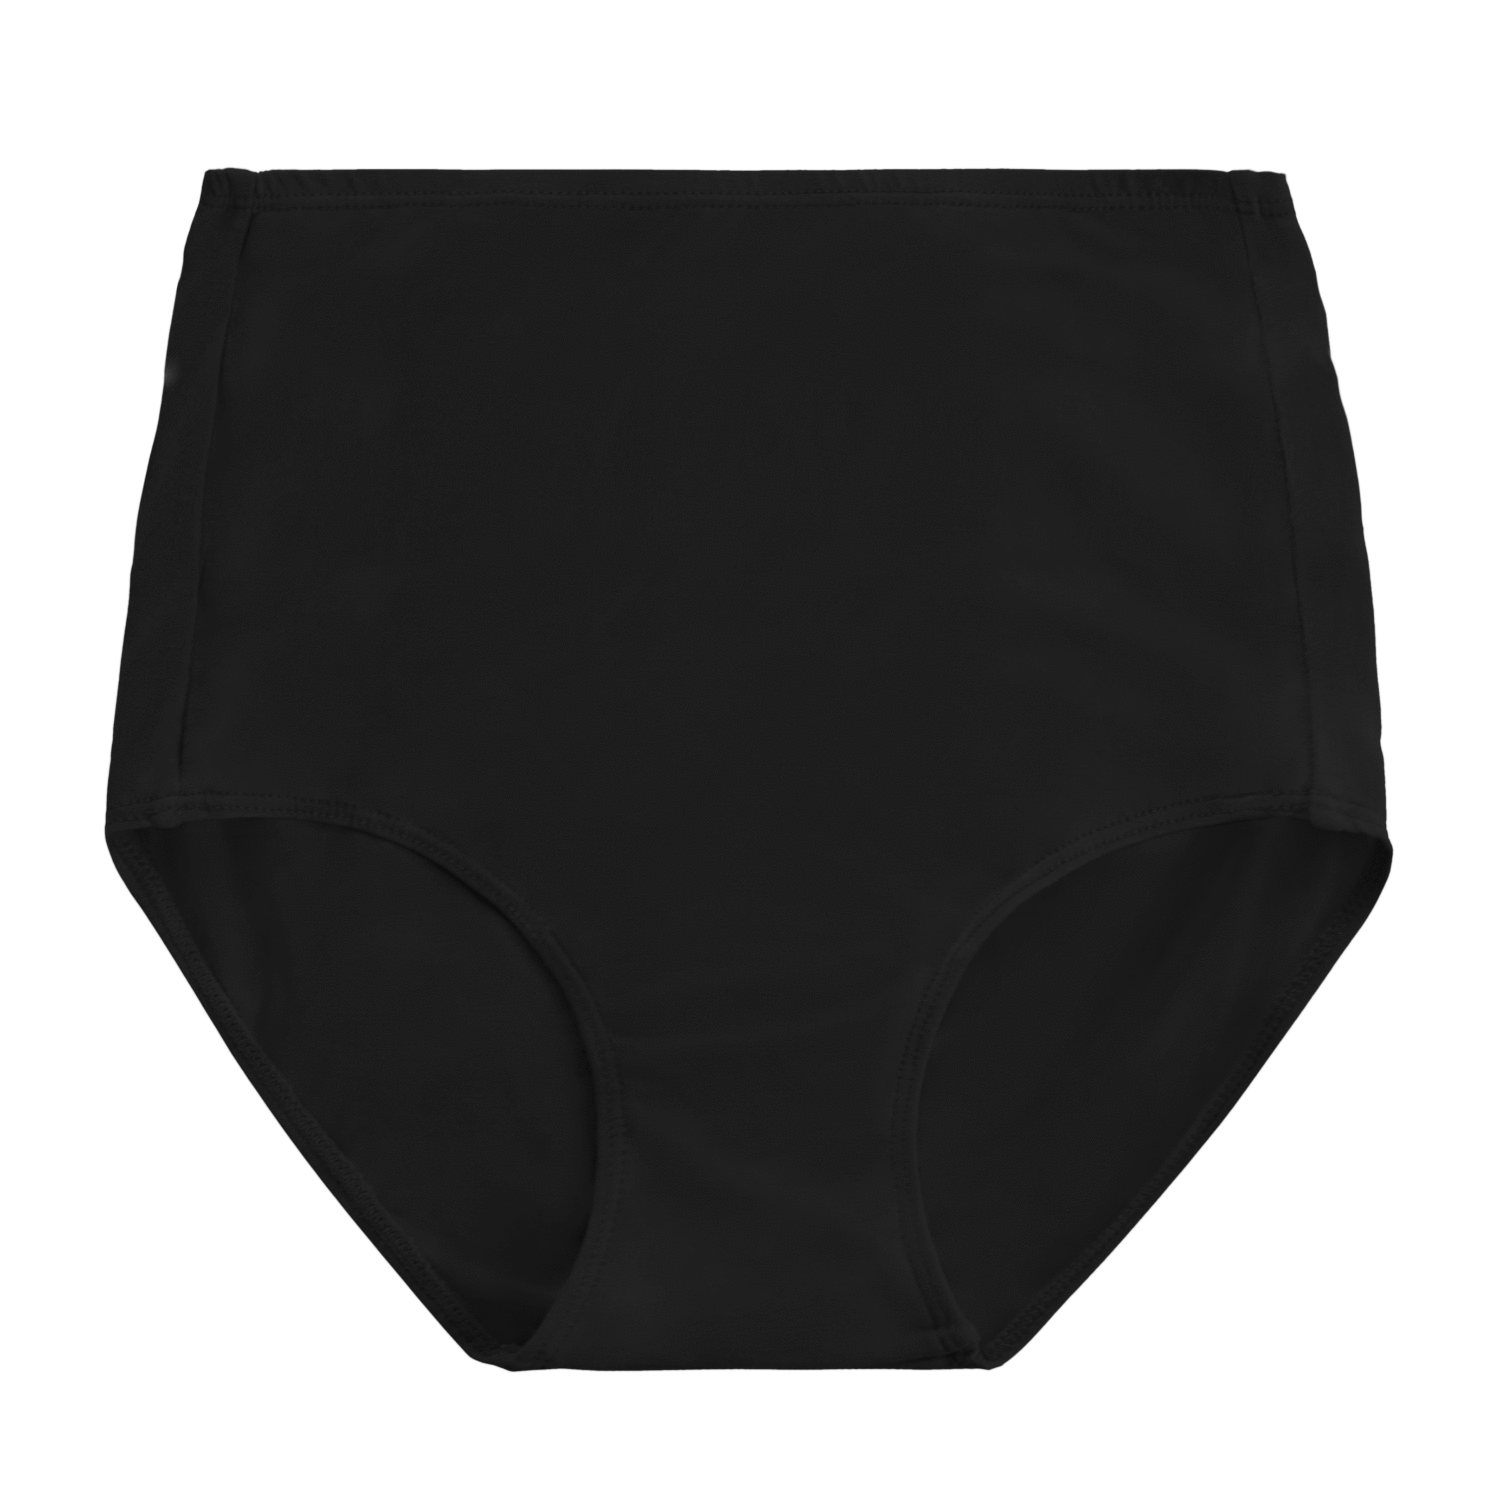 Saalt Period Underwear- Thong- Leakproof, Light Absorbency, Recycled